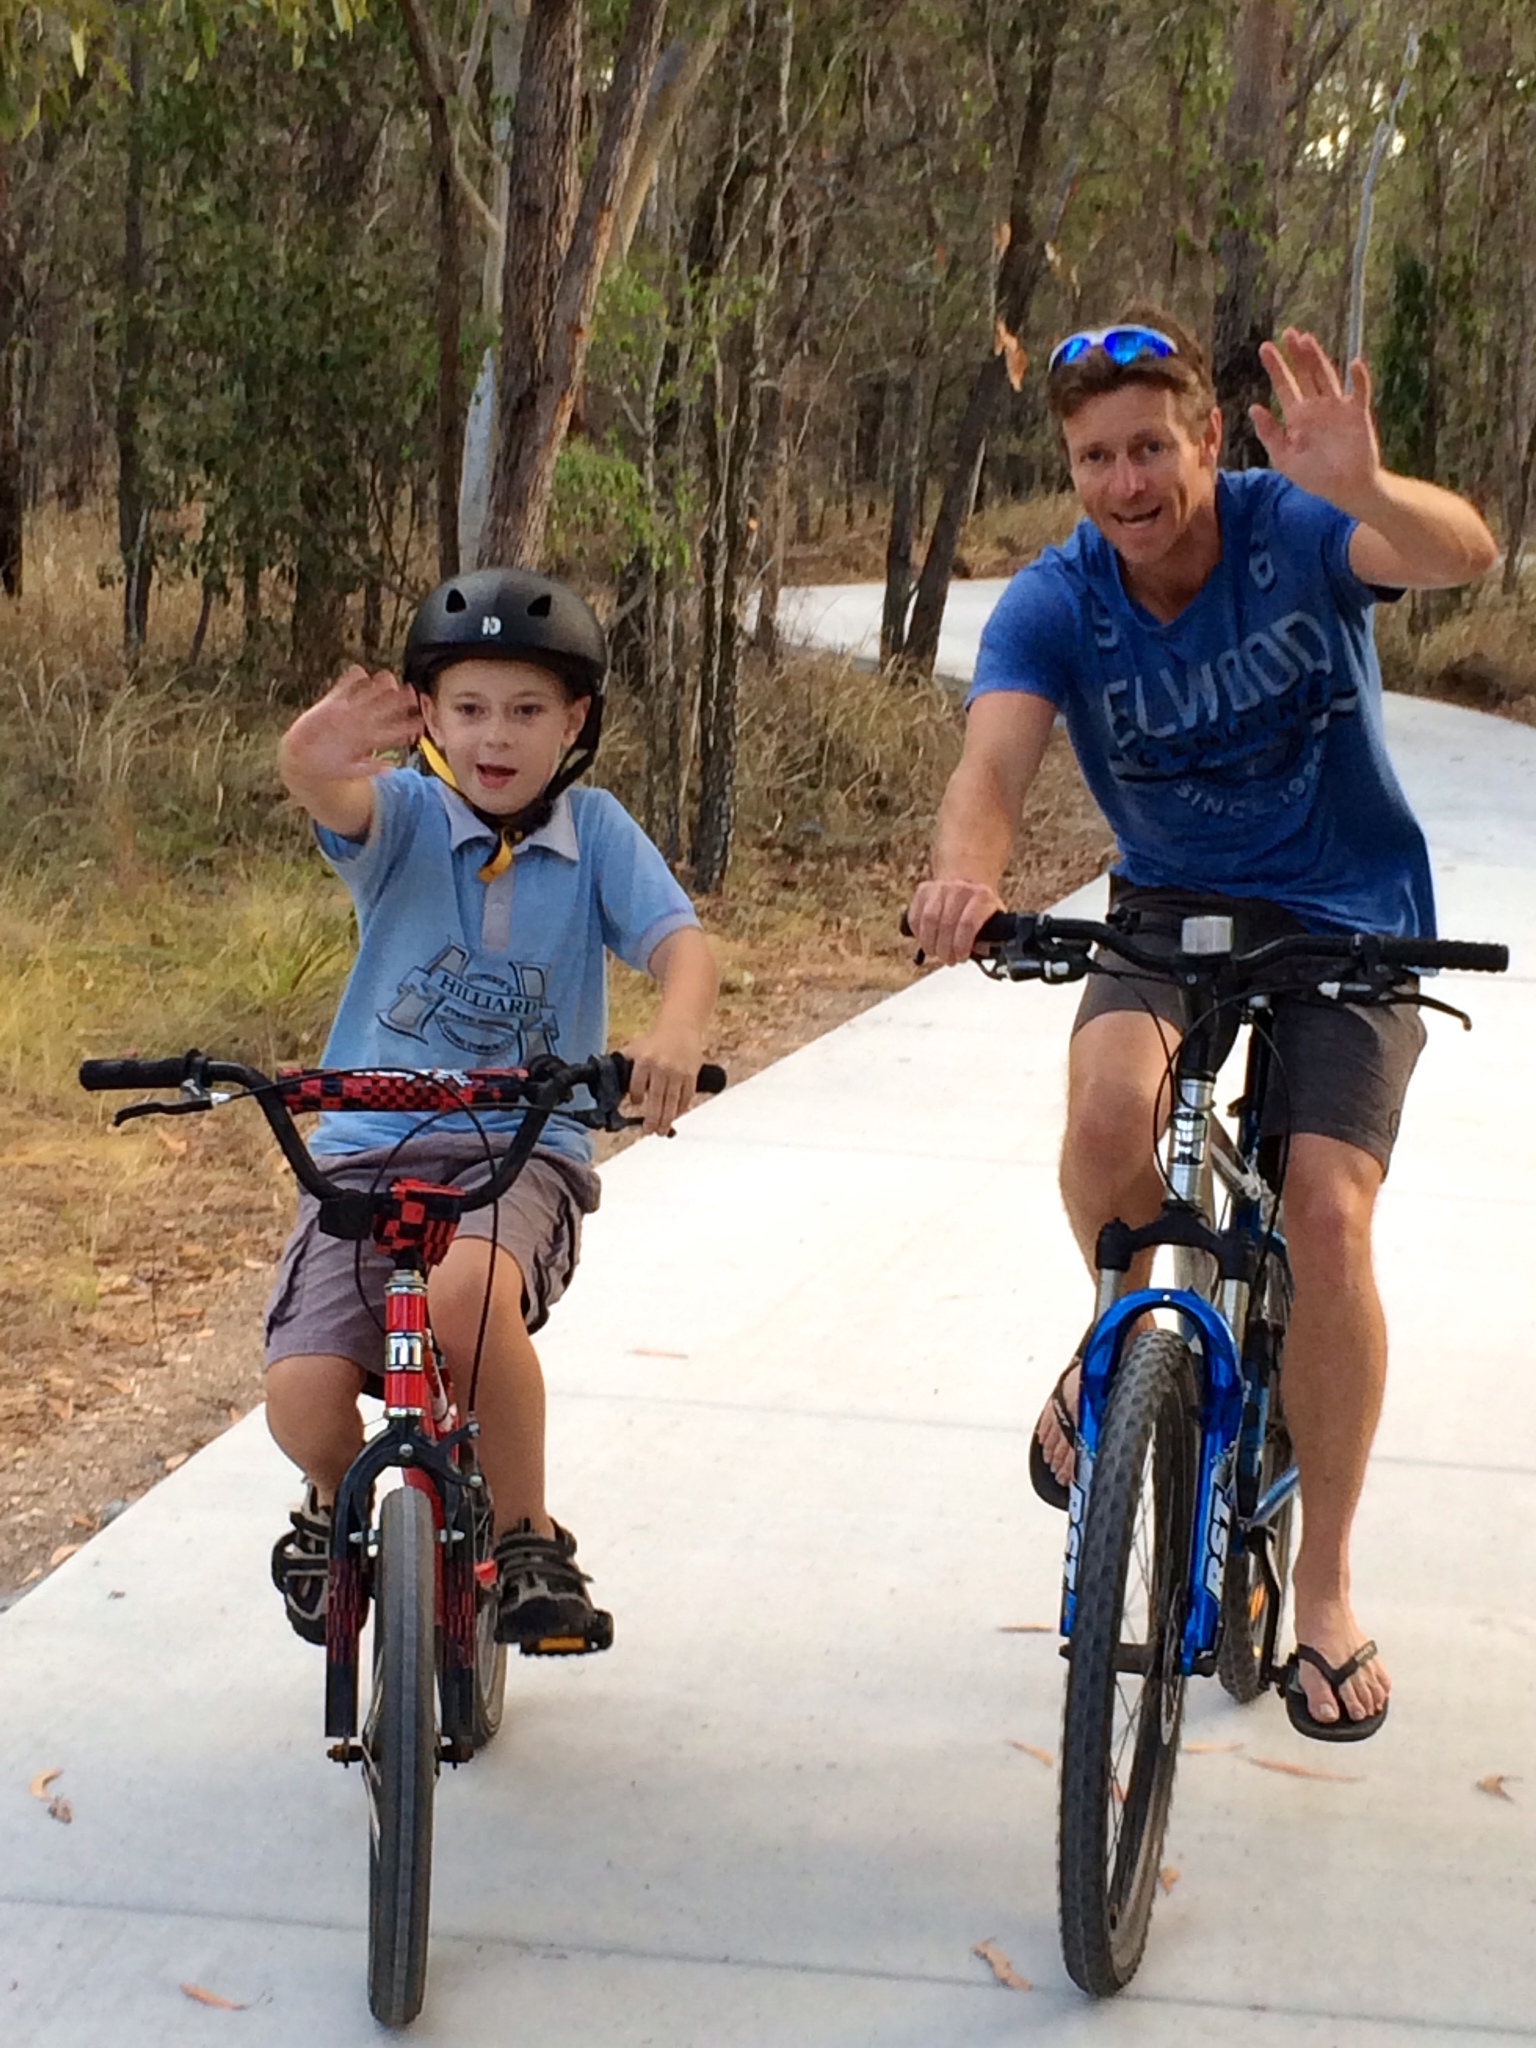 Noosa to Byron bike ride raises money for ASD – Griffith News